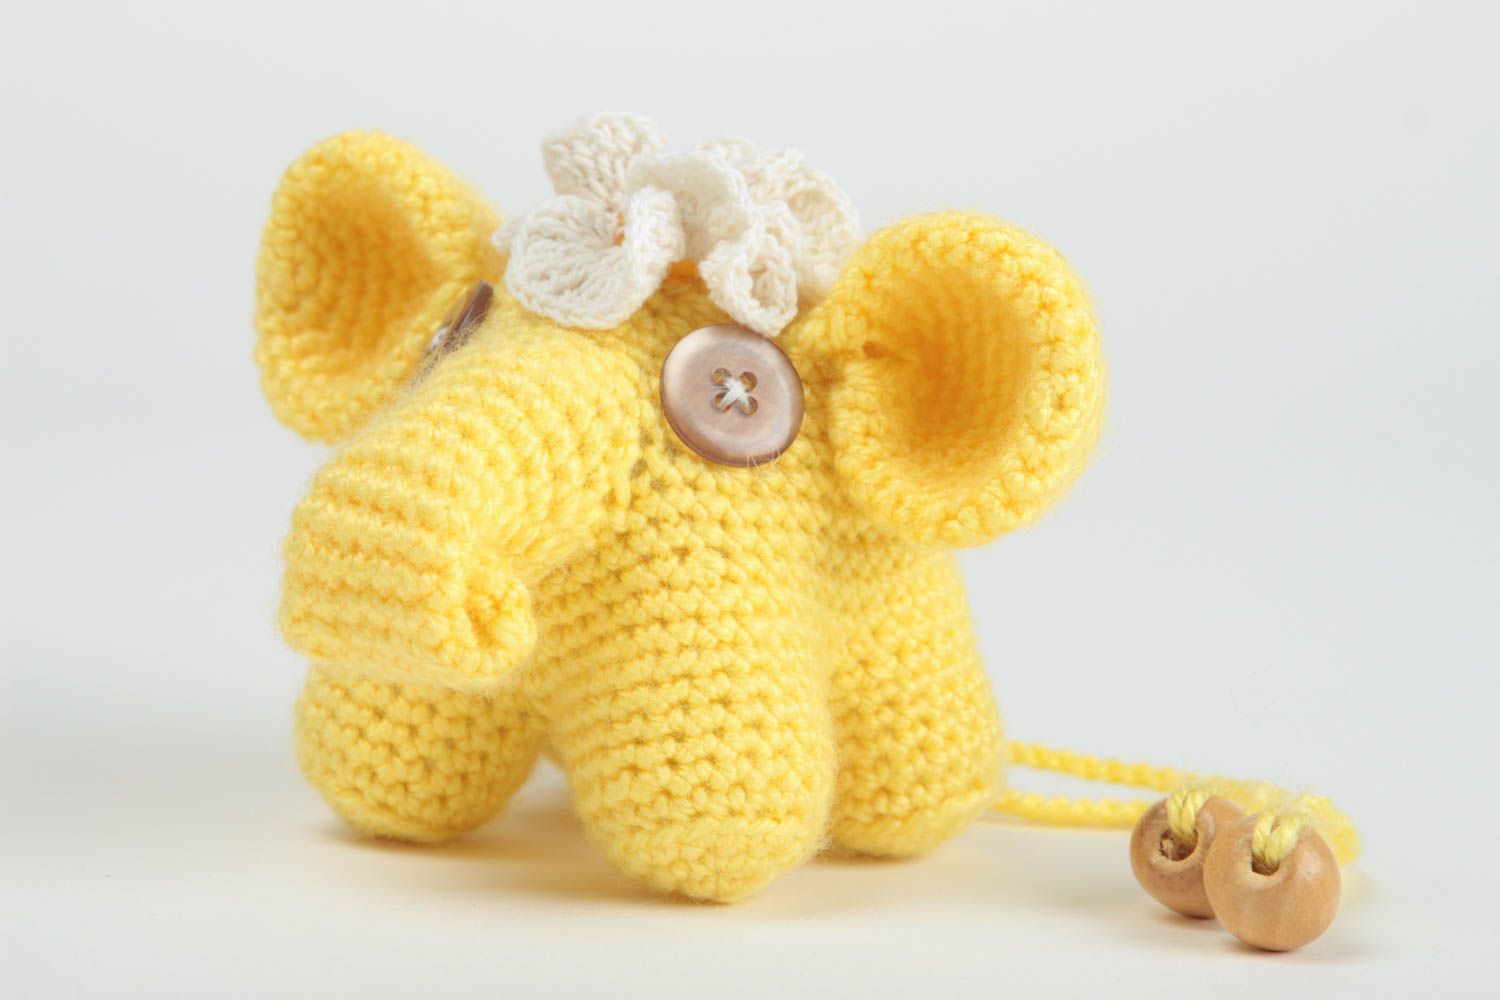 Beautiful handmade crochet toy childrens stuffed soft toy home design gift ideas photo 2